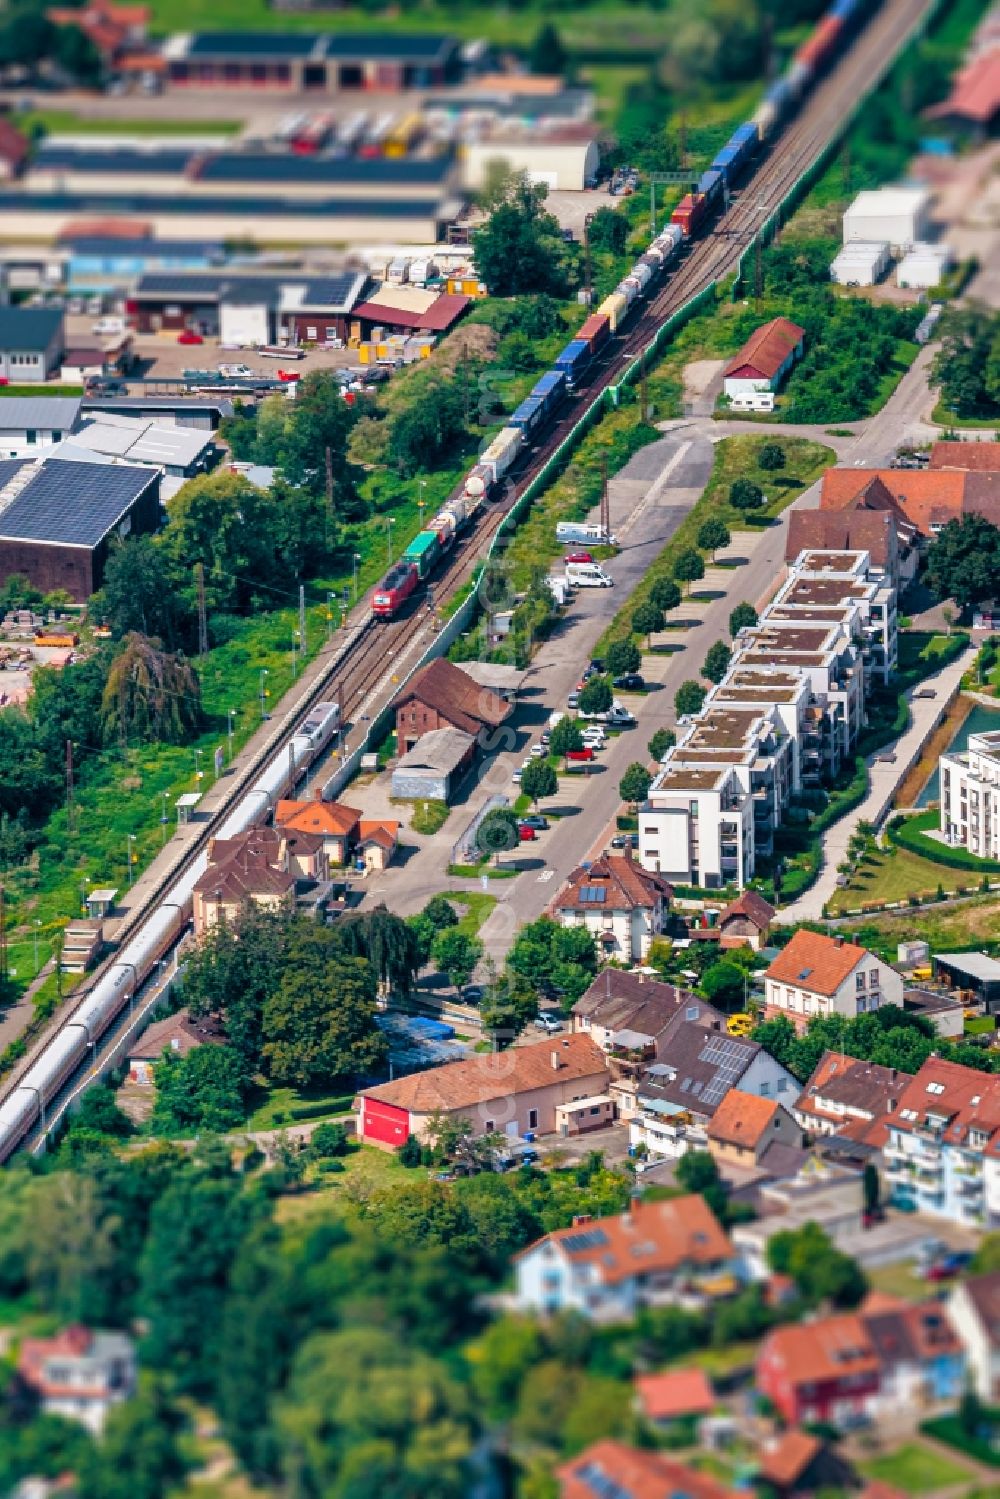 Aerial photograph Kenzingen - Railway track and overhead wiring harness in the route network of the Deutsche Bahn in Kenzingen in the state Baden-Wuerttemberg, Germany